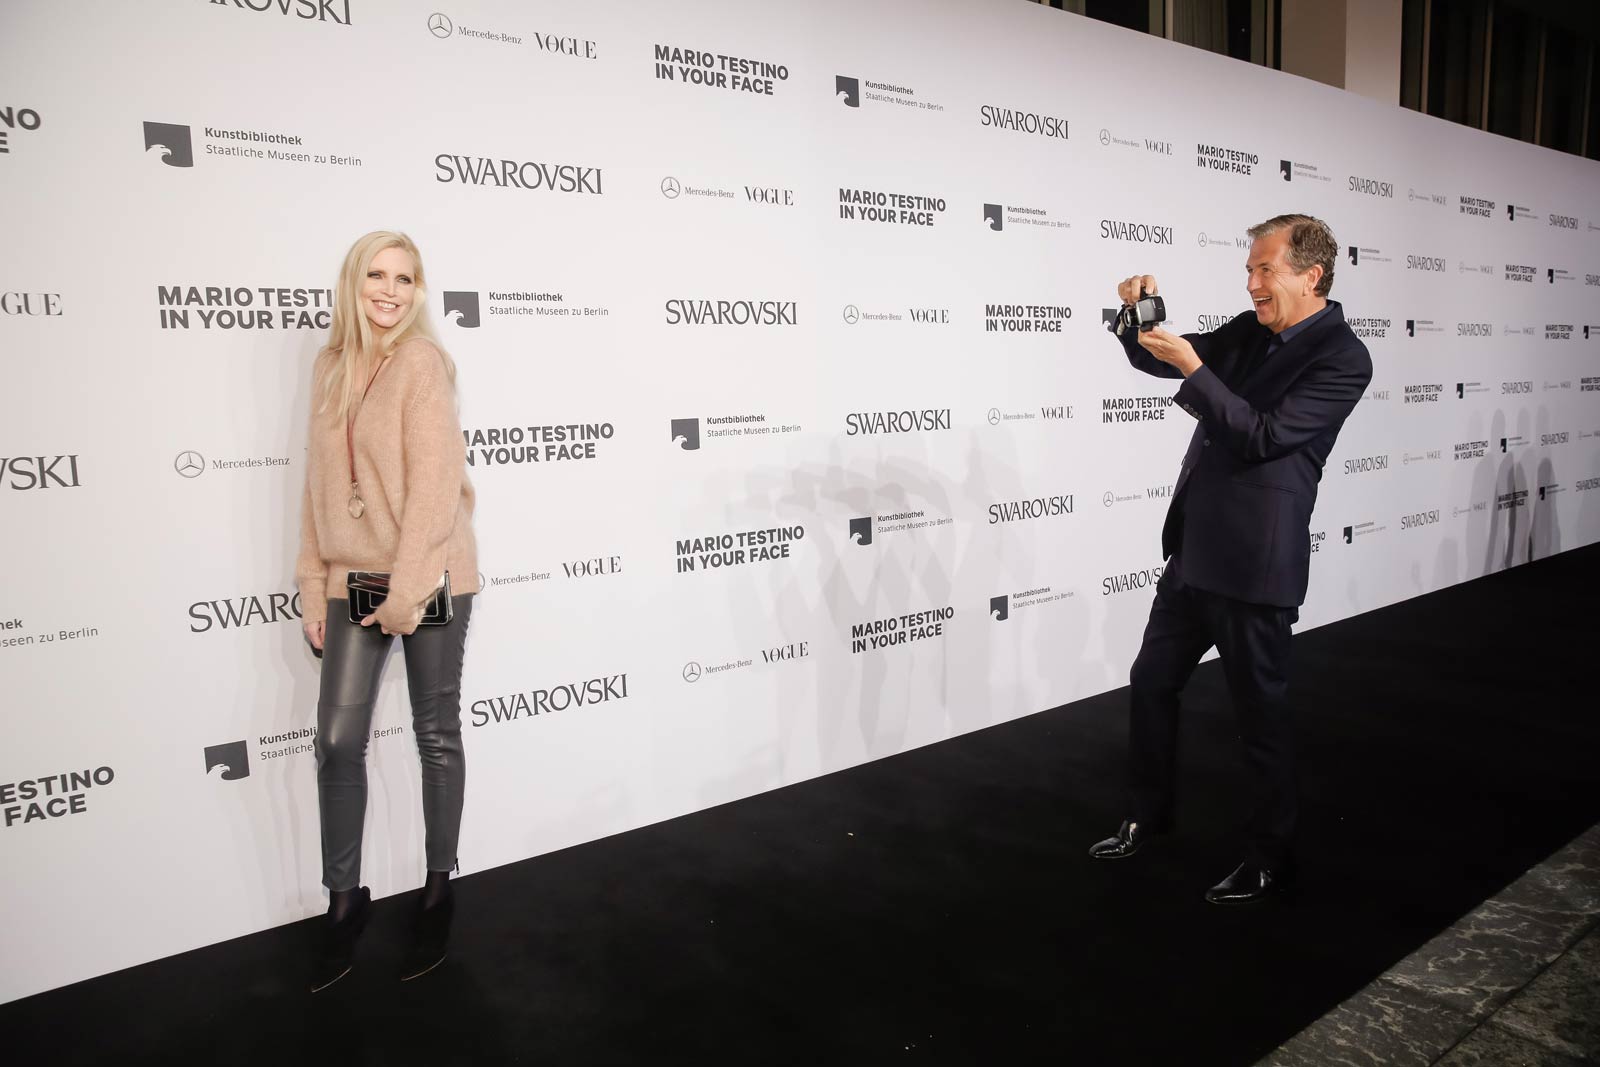 Nadja Auermann attends Merceses Benz Fashion Week